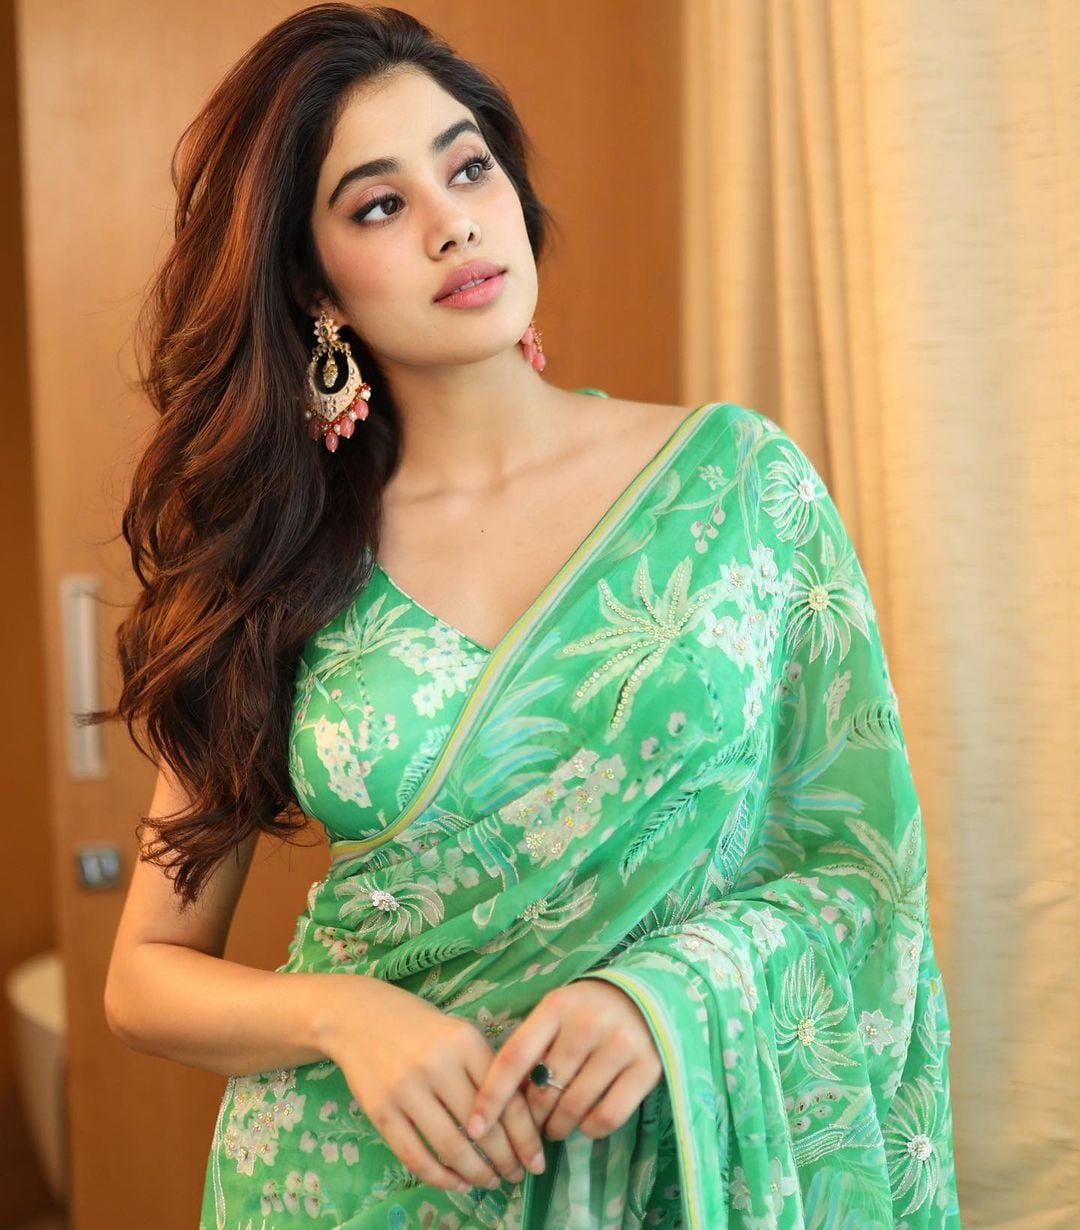 Janhvi Kapoor looks beautiful in the green tropical-themed saree.